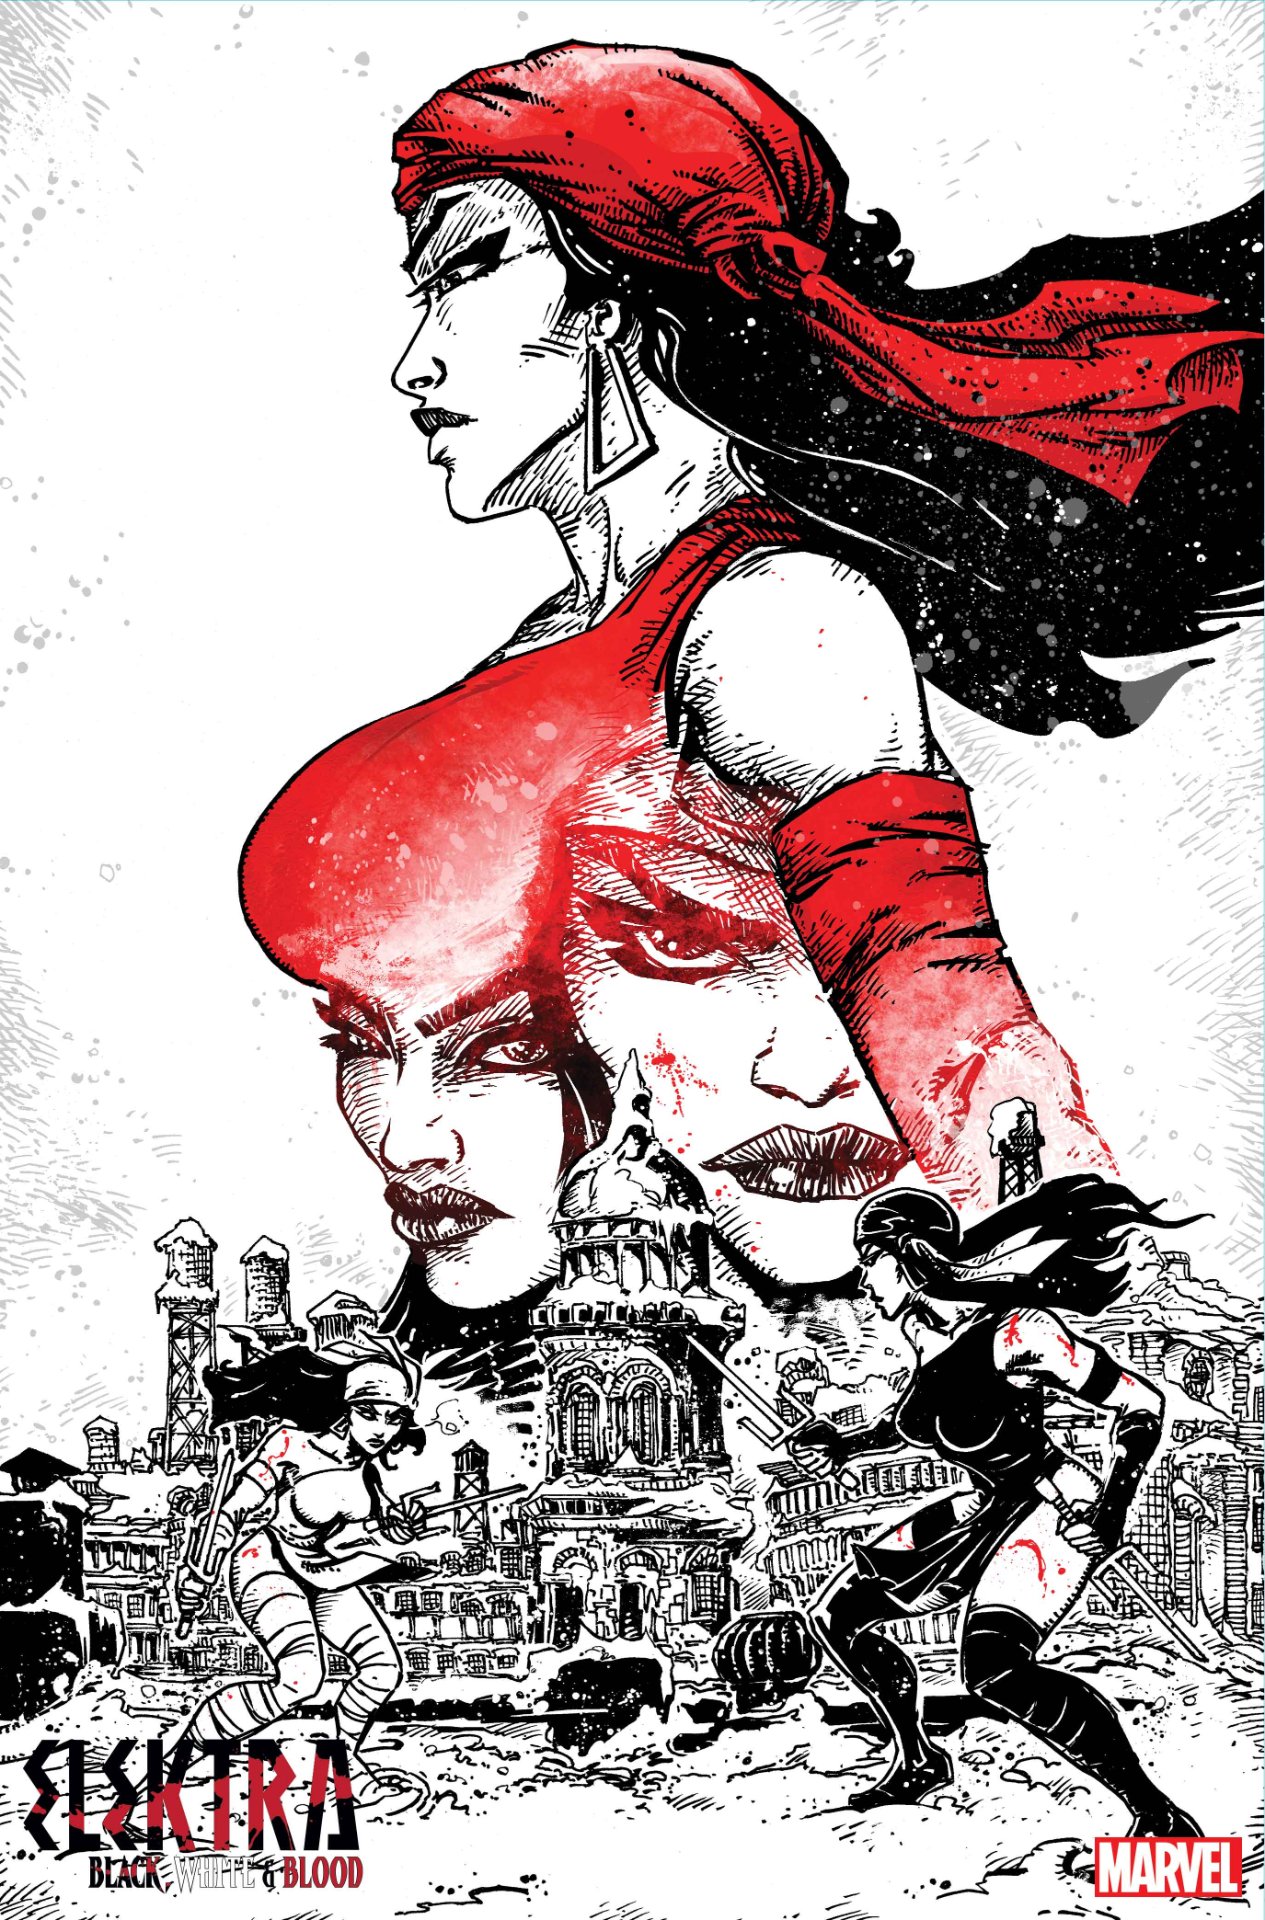 Elektra: Black, White & Blood #4